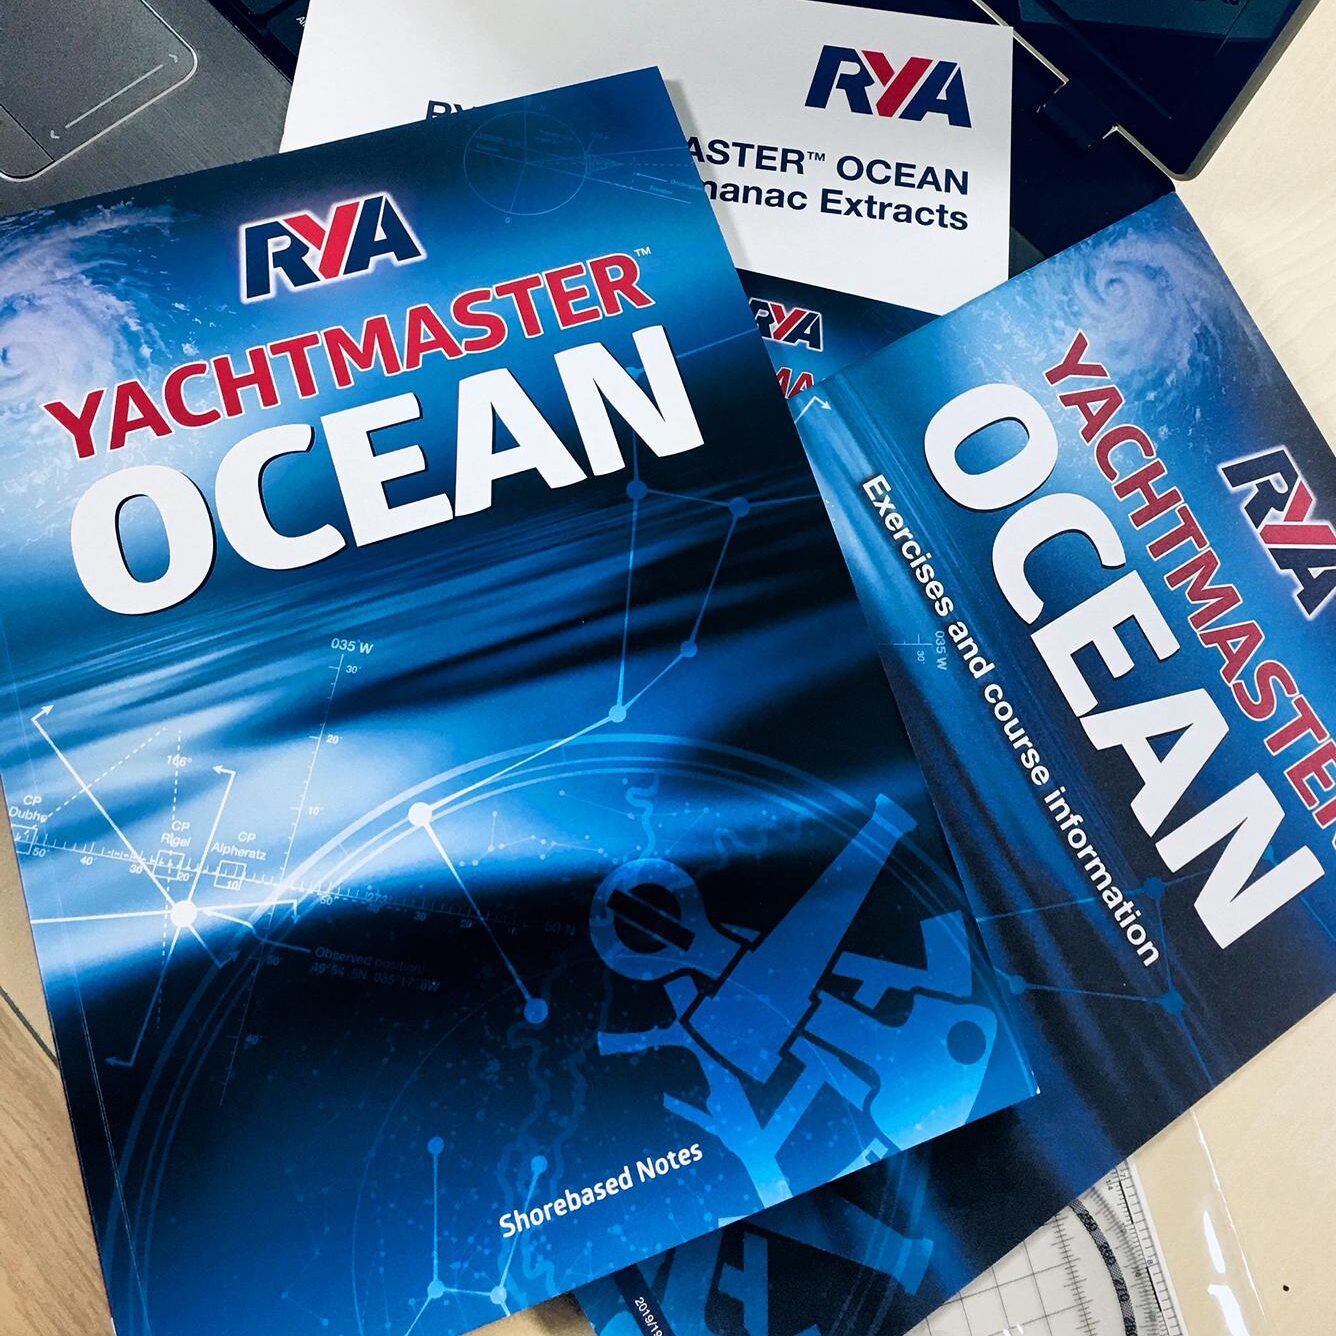 rya yachtmaster book